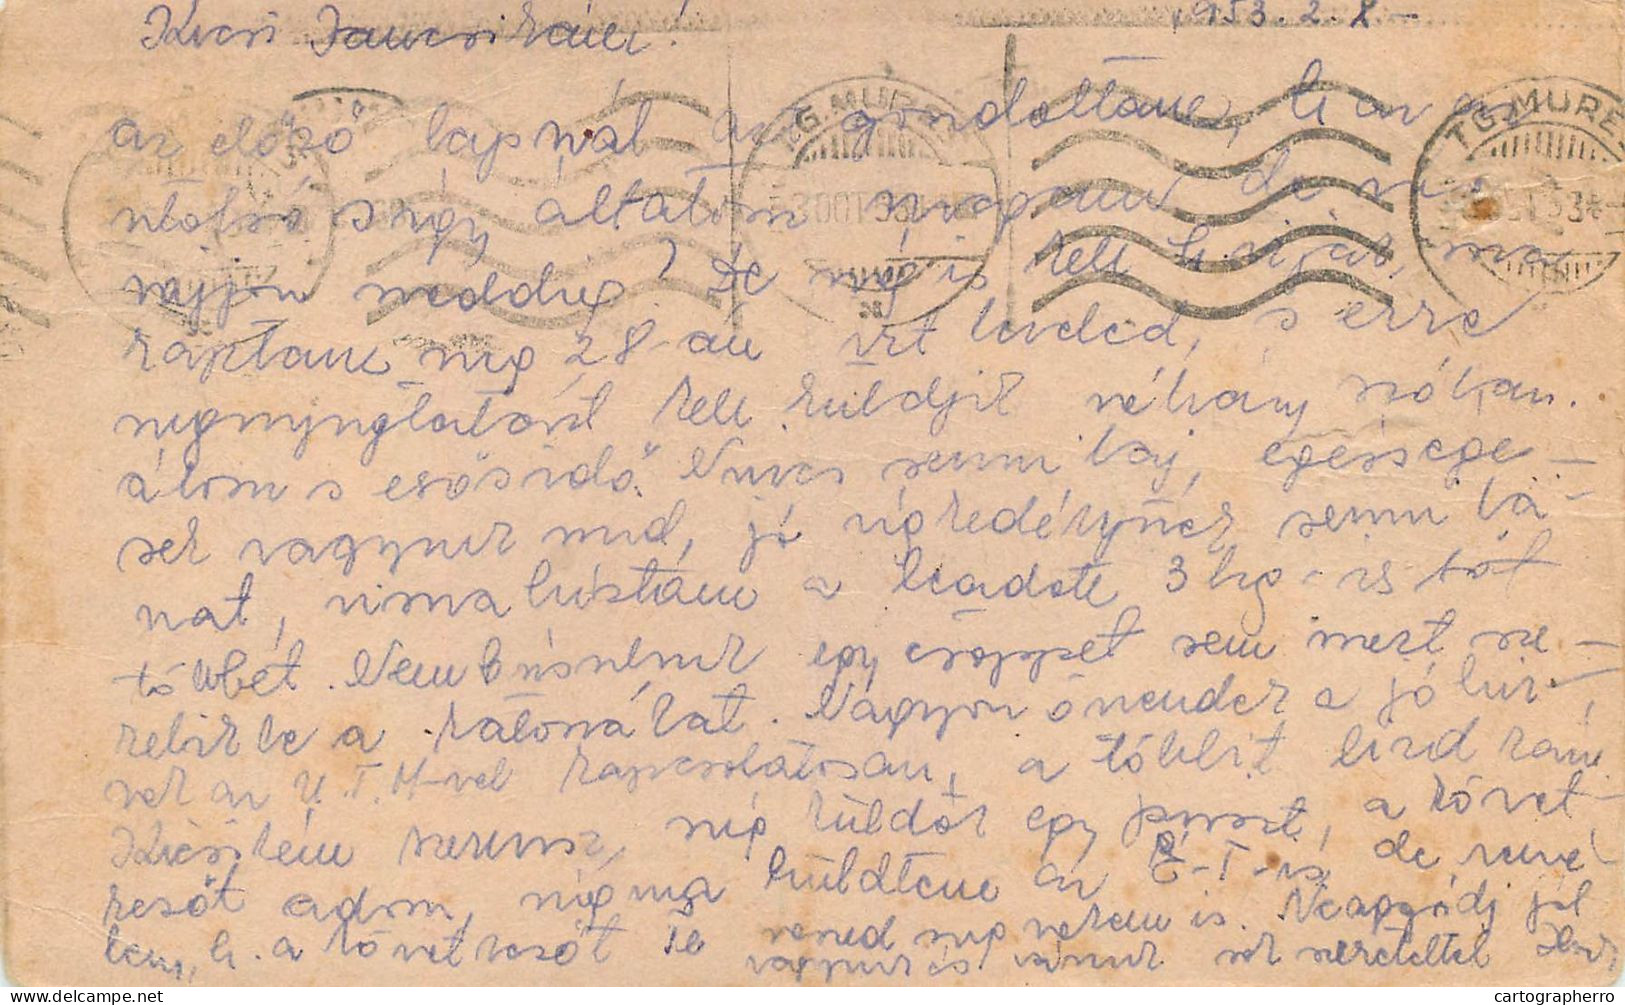 Postal Stationery Postcard Romania Borsec 1953 - Rumania